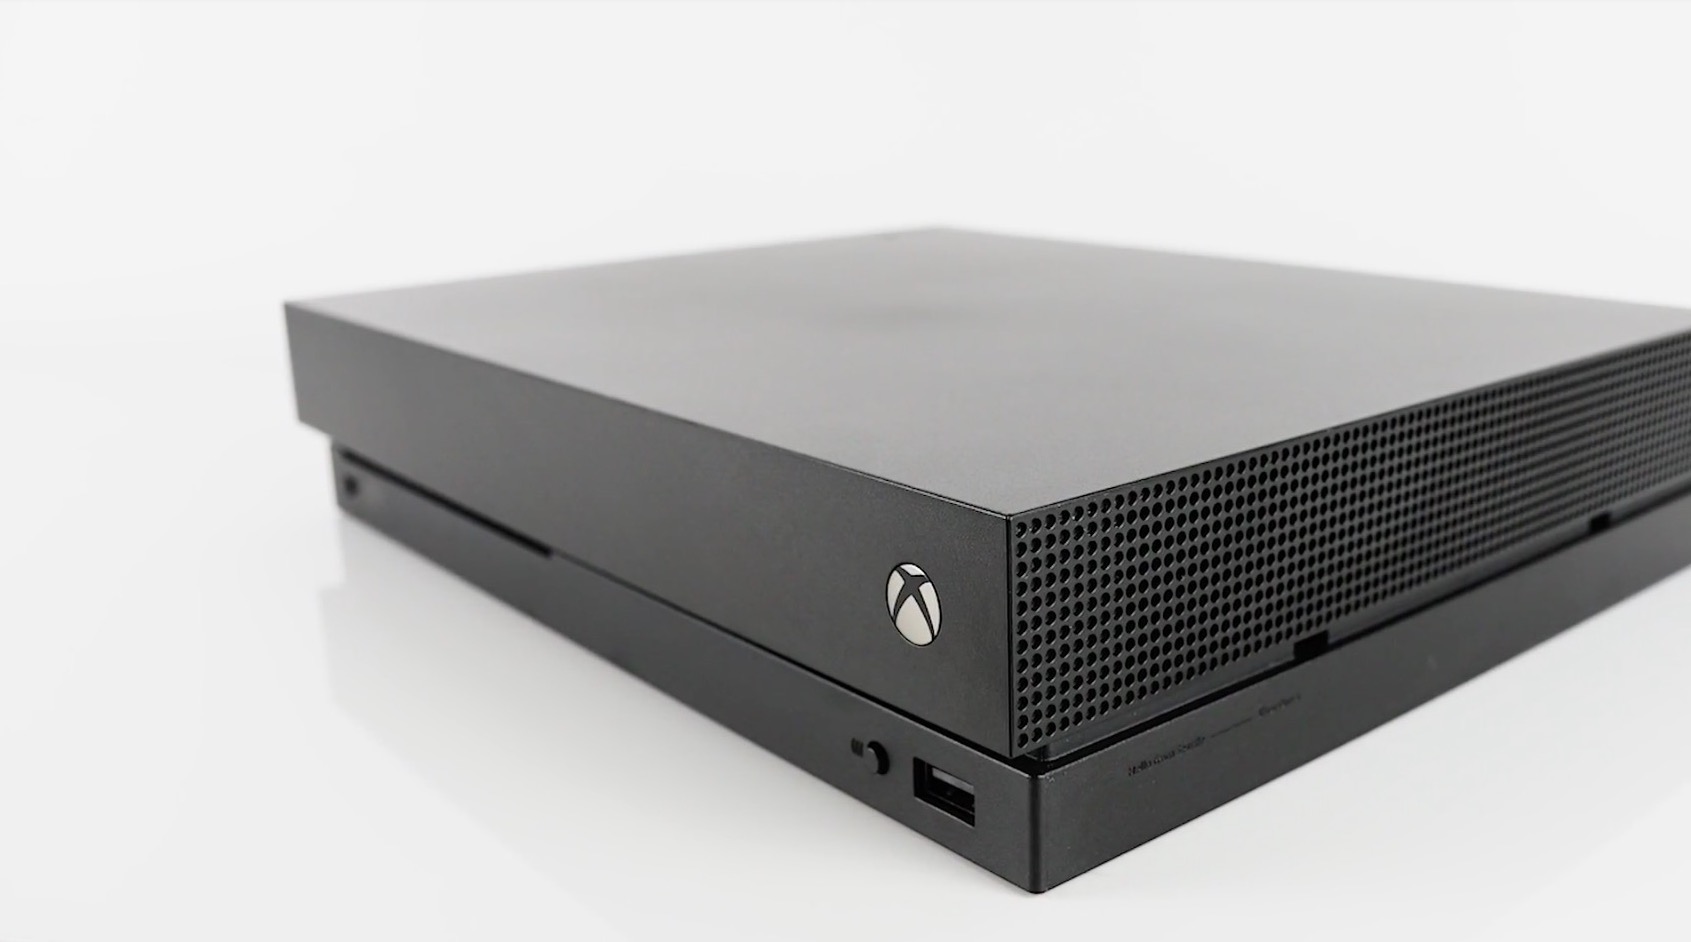 Nuova Xbox nel 2020, nome in codice Scarlet